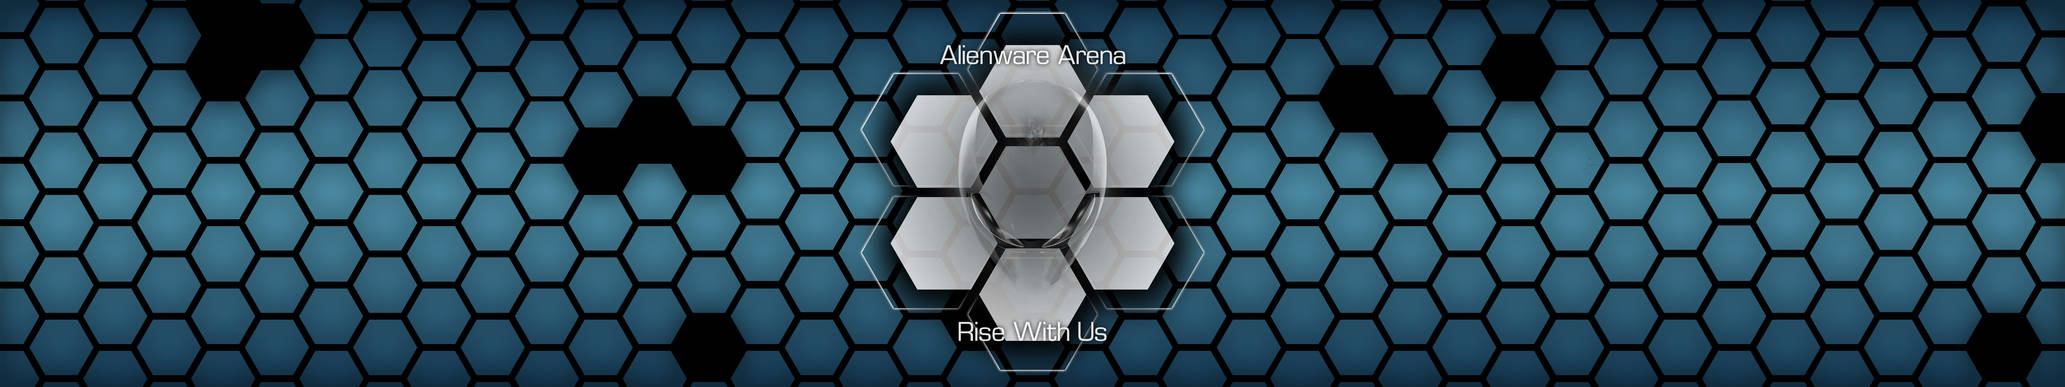 Alienware Arena Hive Wallpaper - HD+